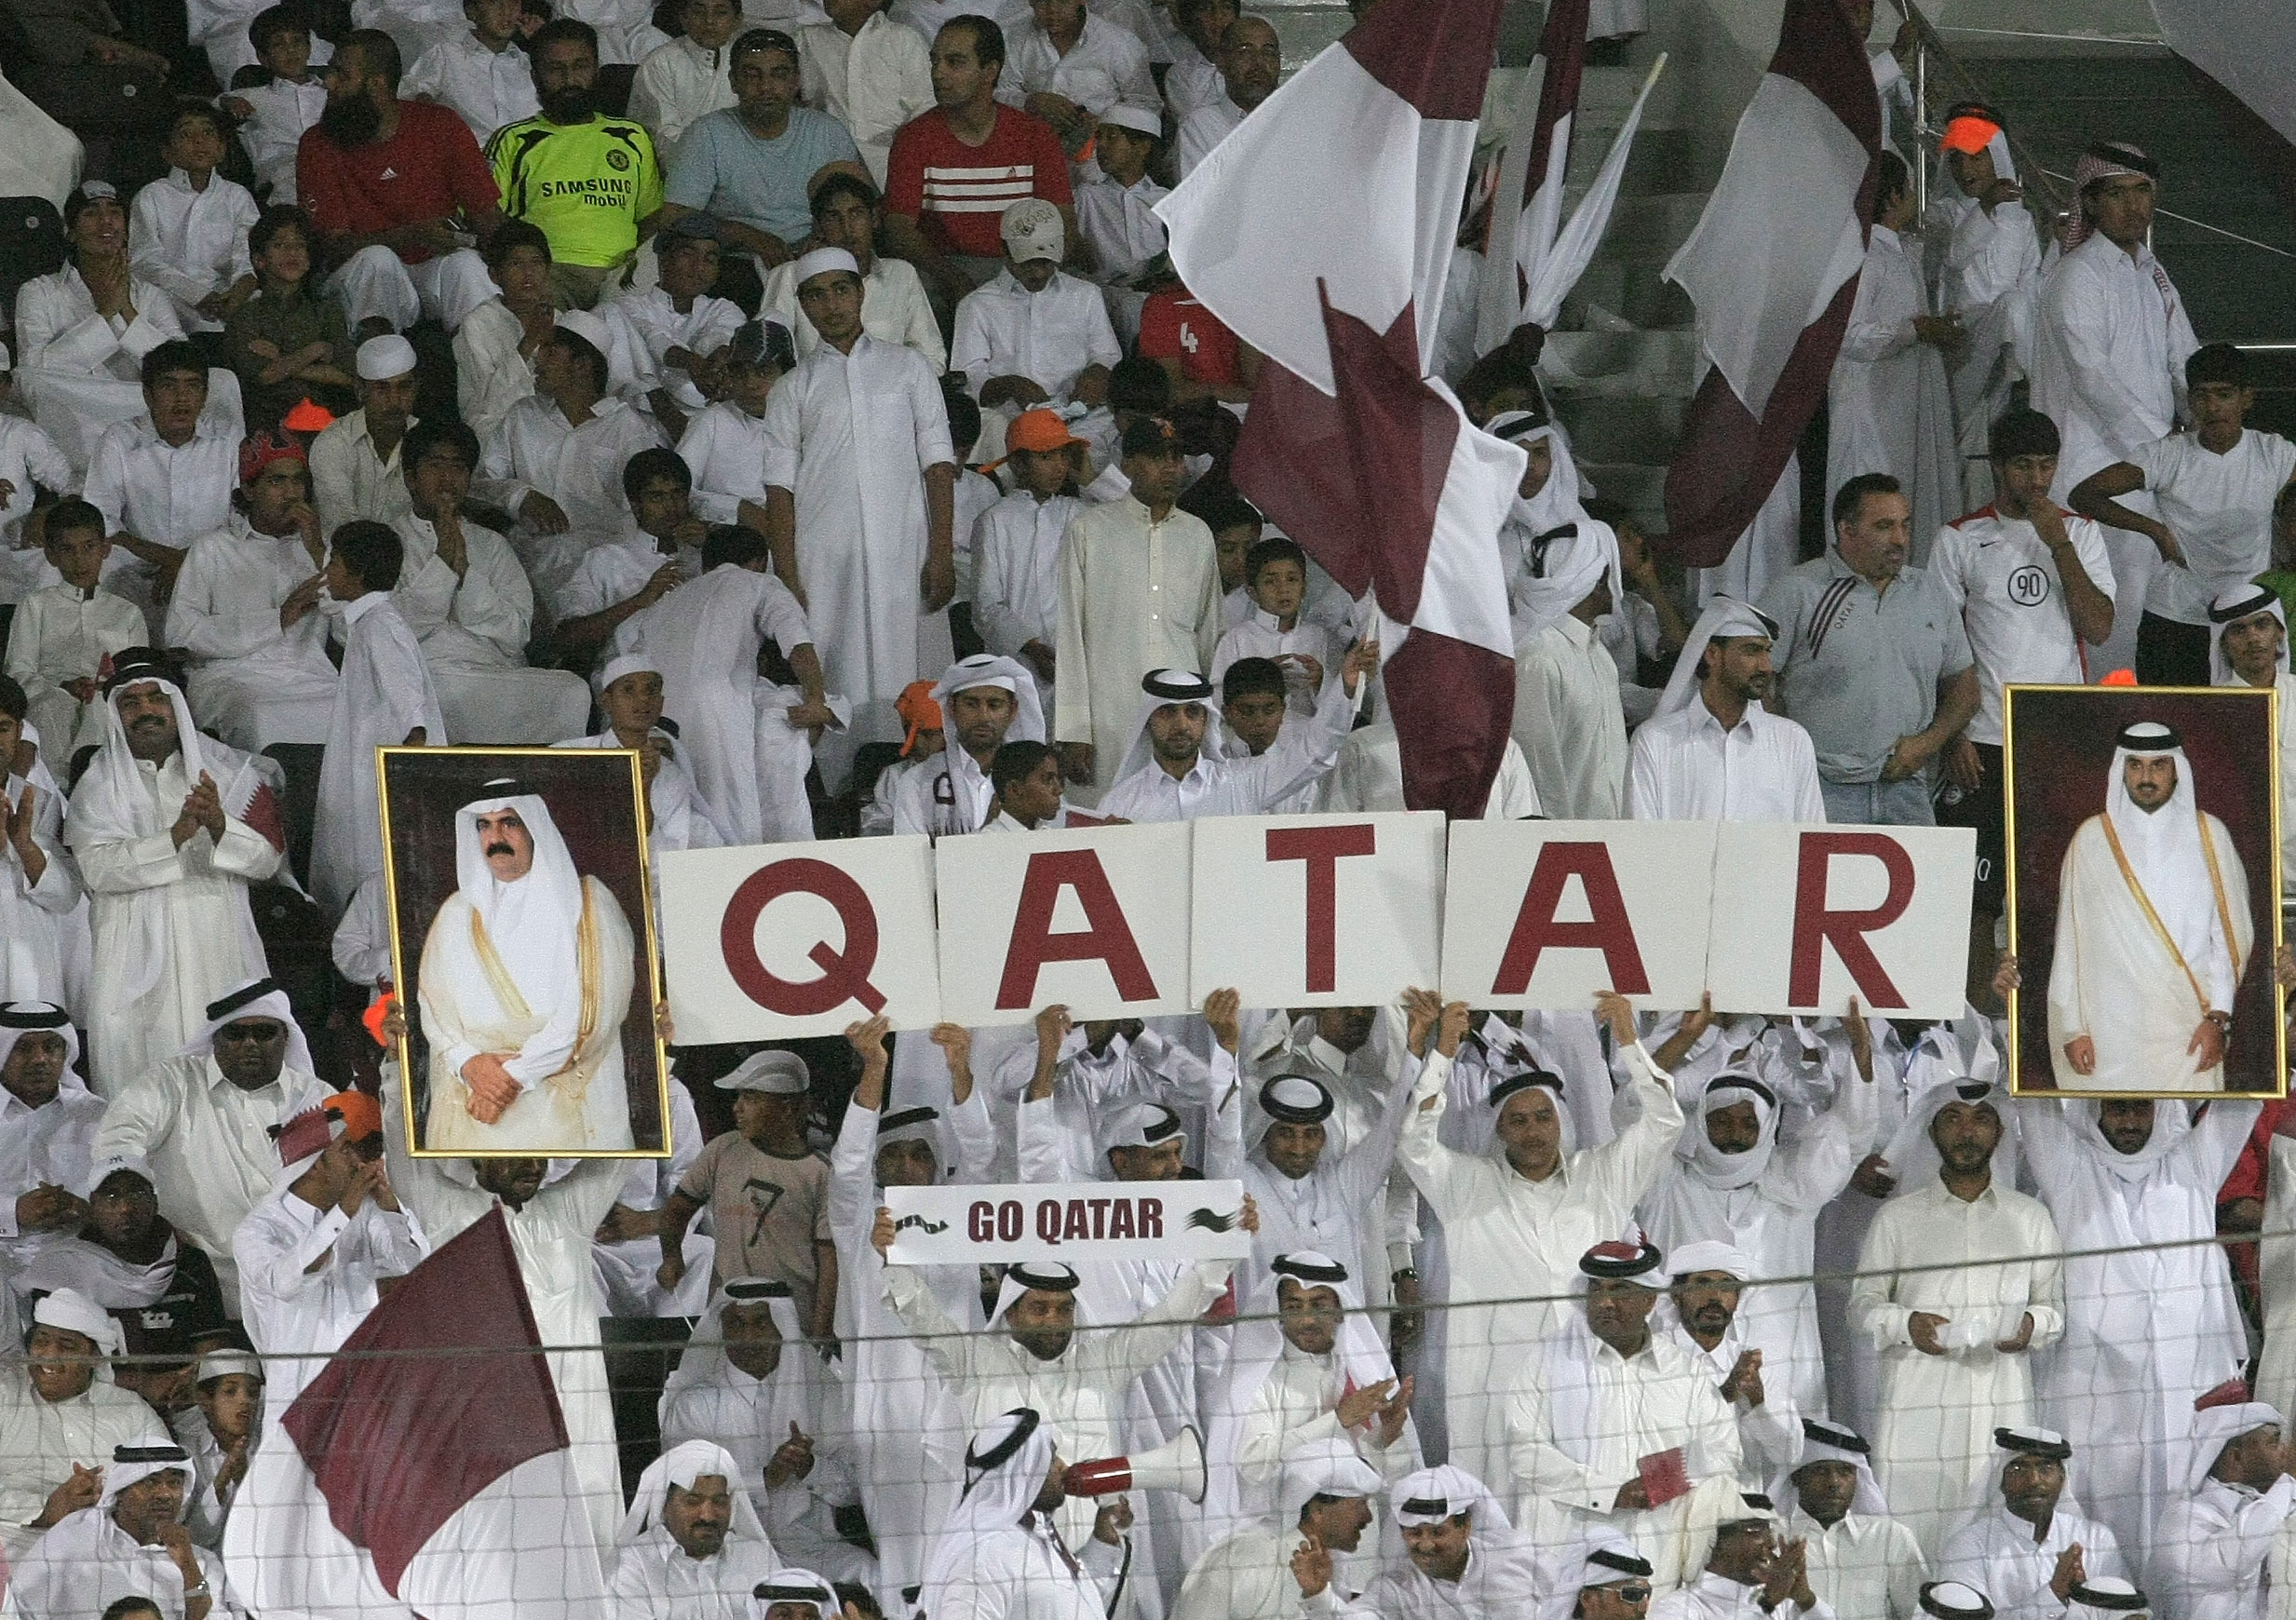 DOHA, QATAR - JUNE 14:  Qatar fans cheer during the 2010 FIFA World Cup qualifying match between Qatar and Australia at Jassim Bin Hamad Stadium on June 14, 2008 in Doha, Qatar. (Photo by Robert Cianflone/Getty Images)